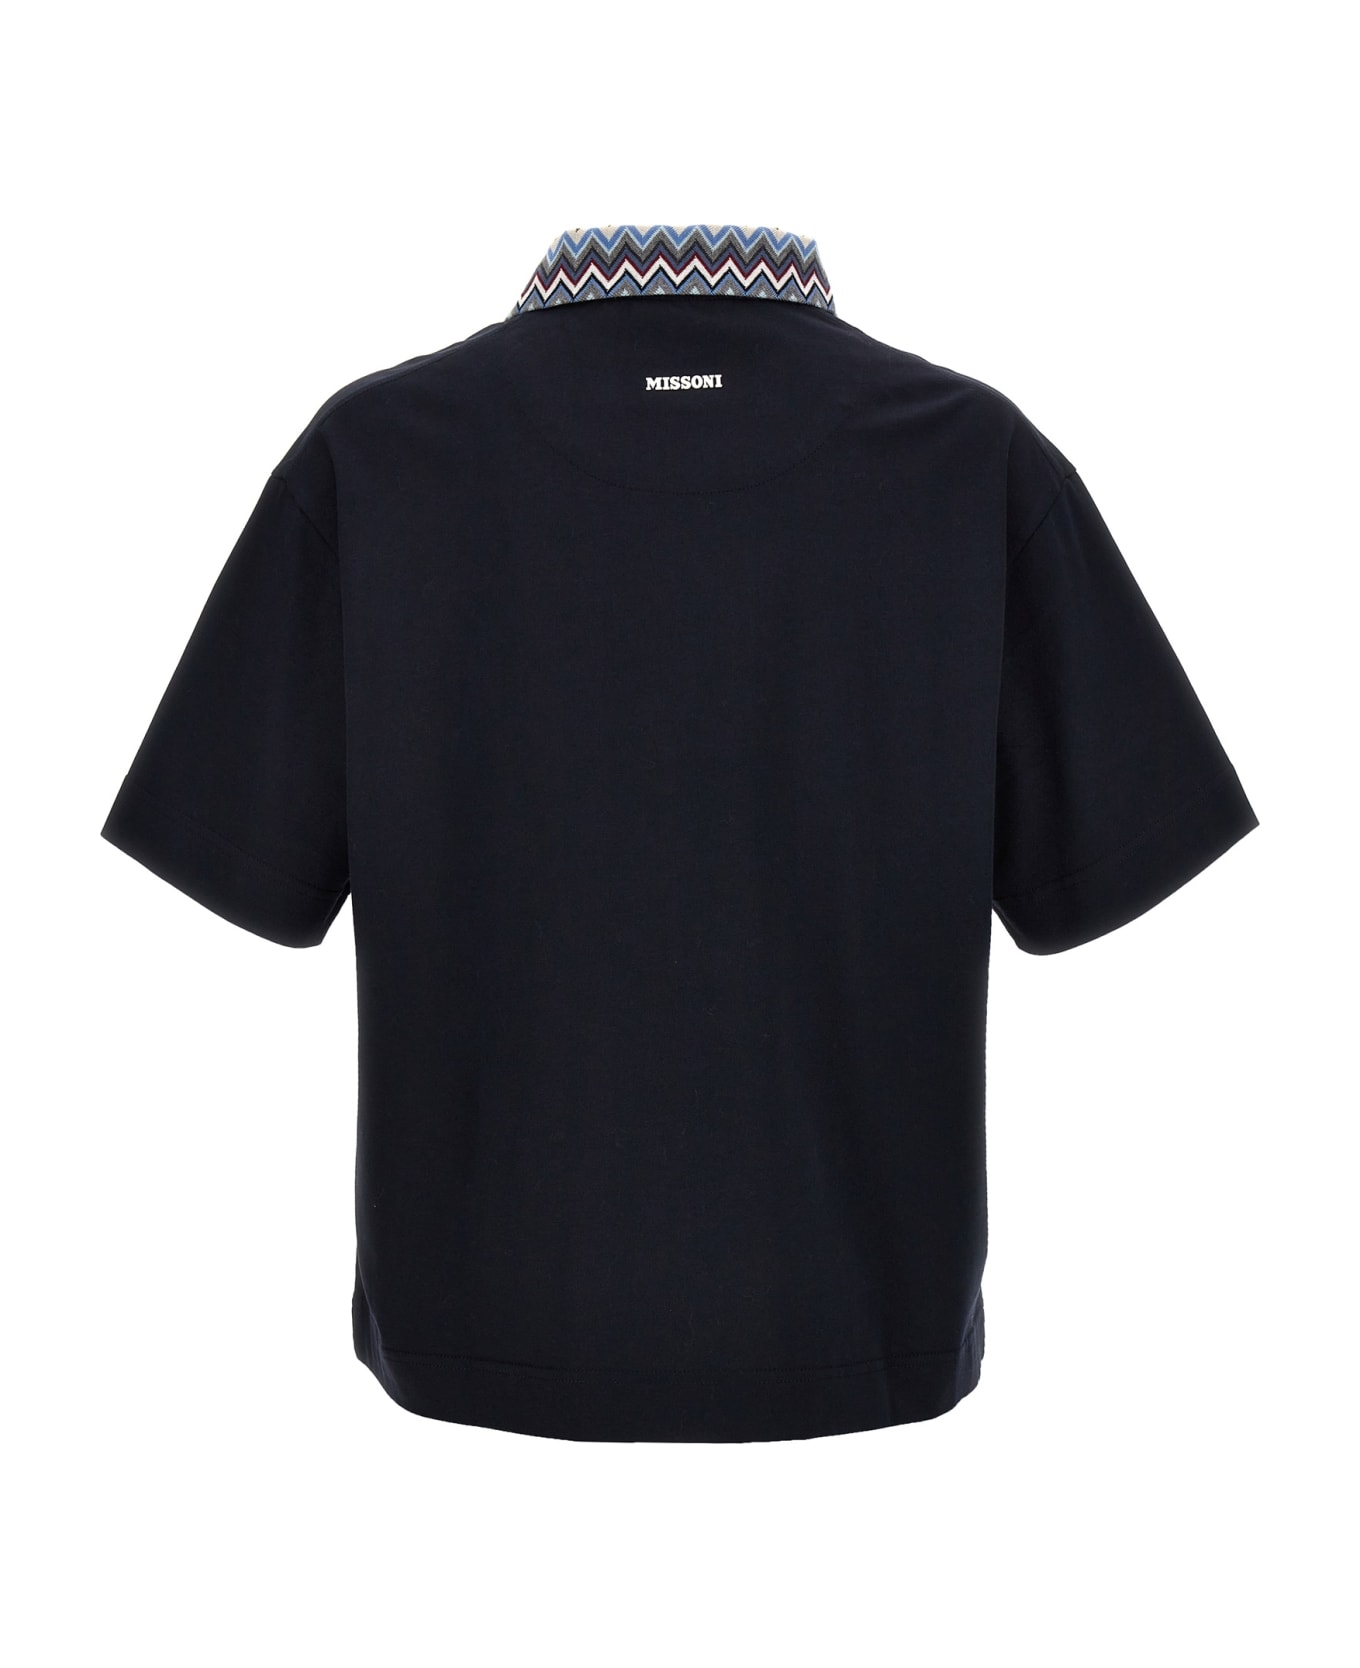 Missoni Zigzag Collar Polo Shirt - Blue